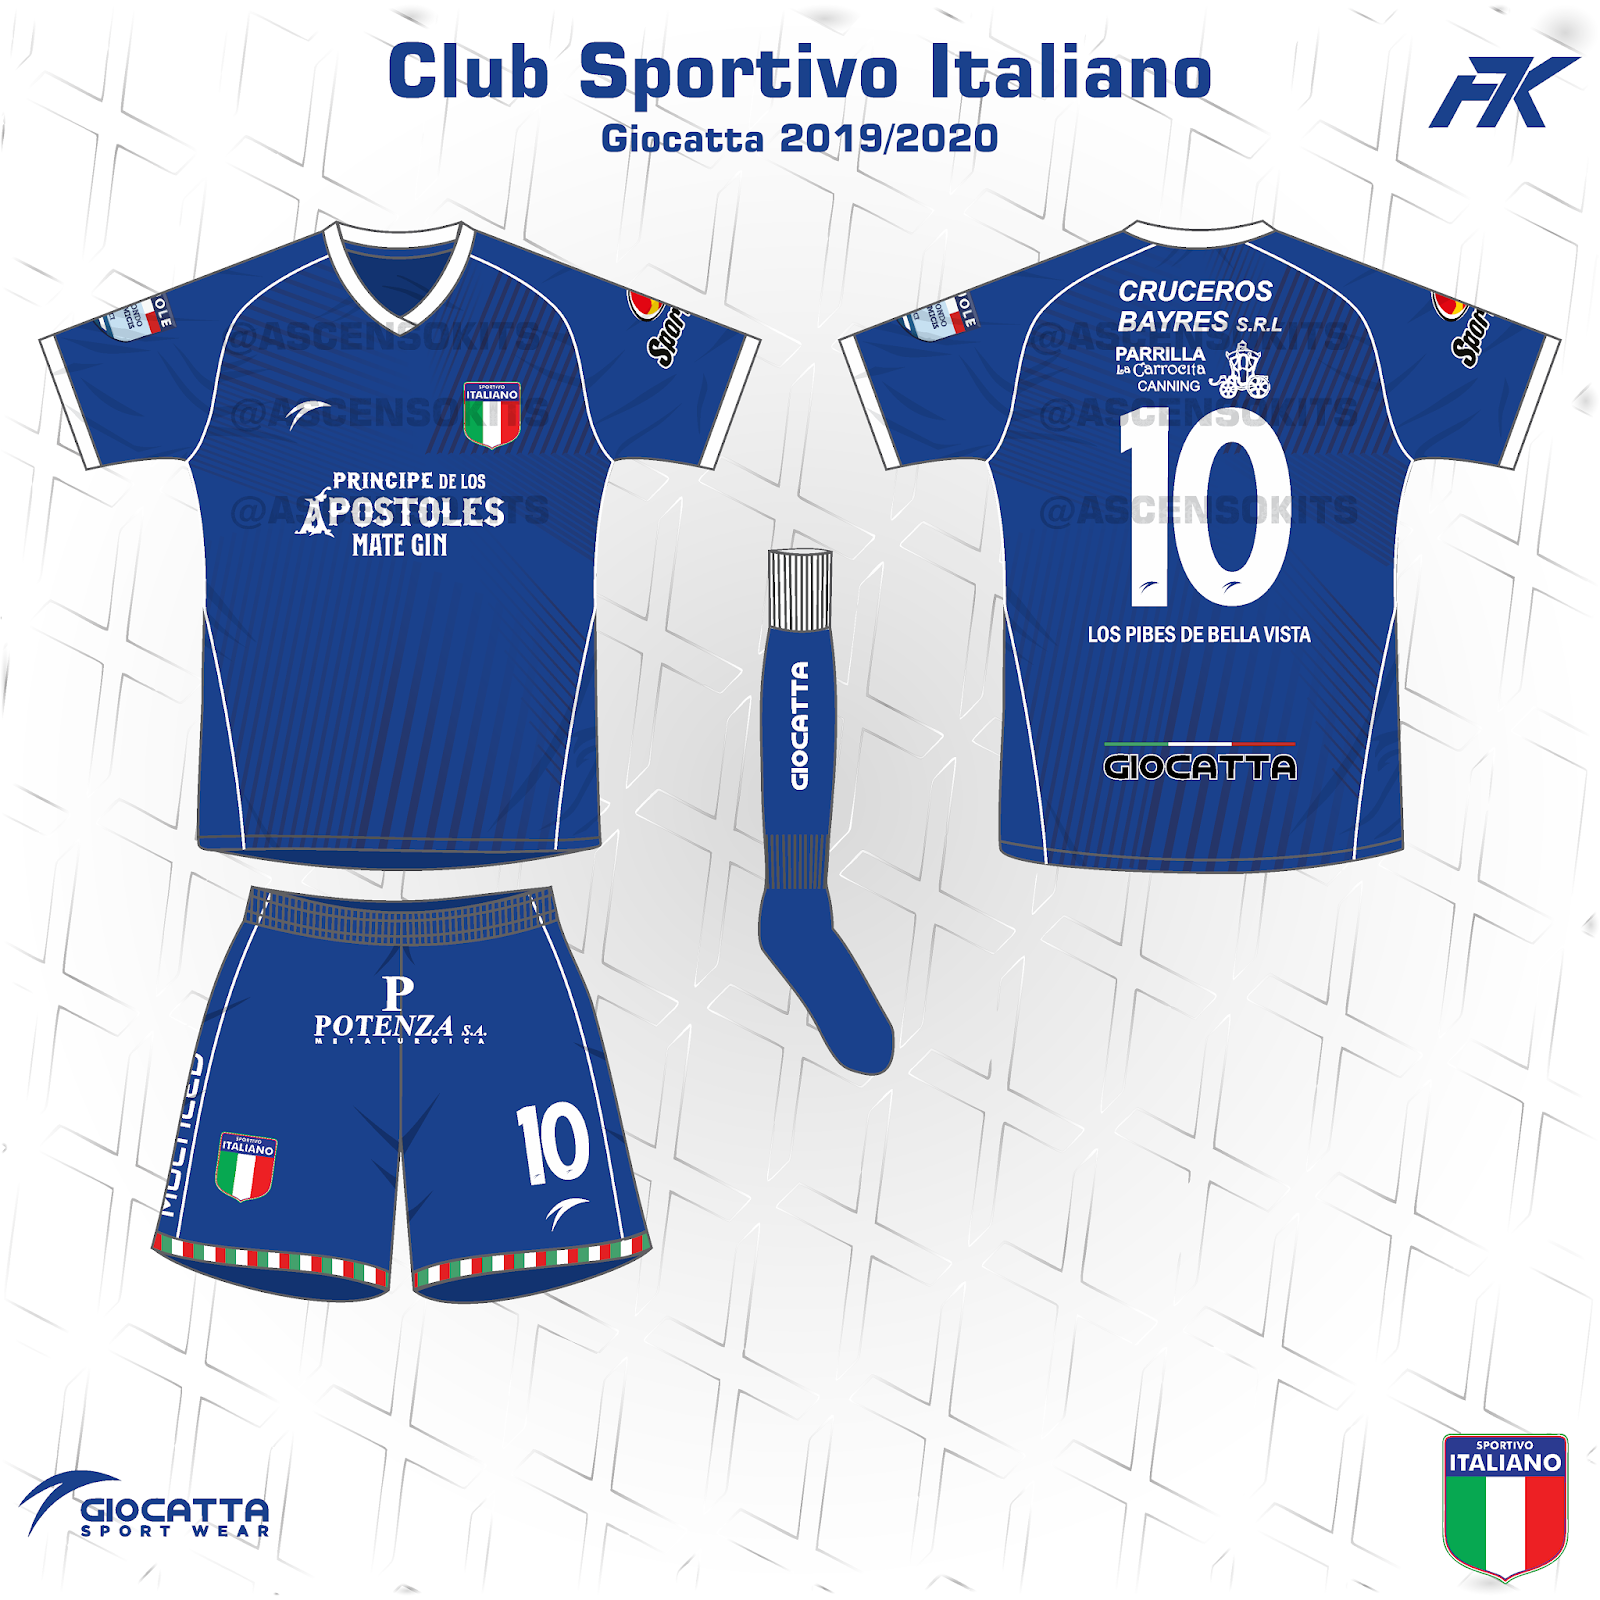 Club Sportivo Italiano (@SpItaliano) / X